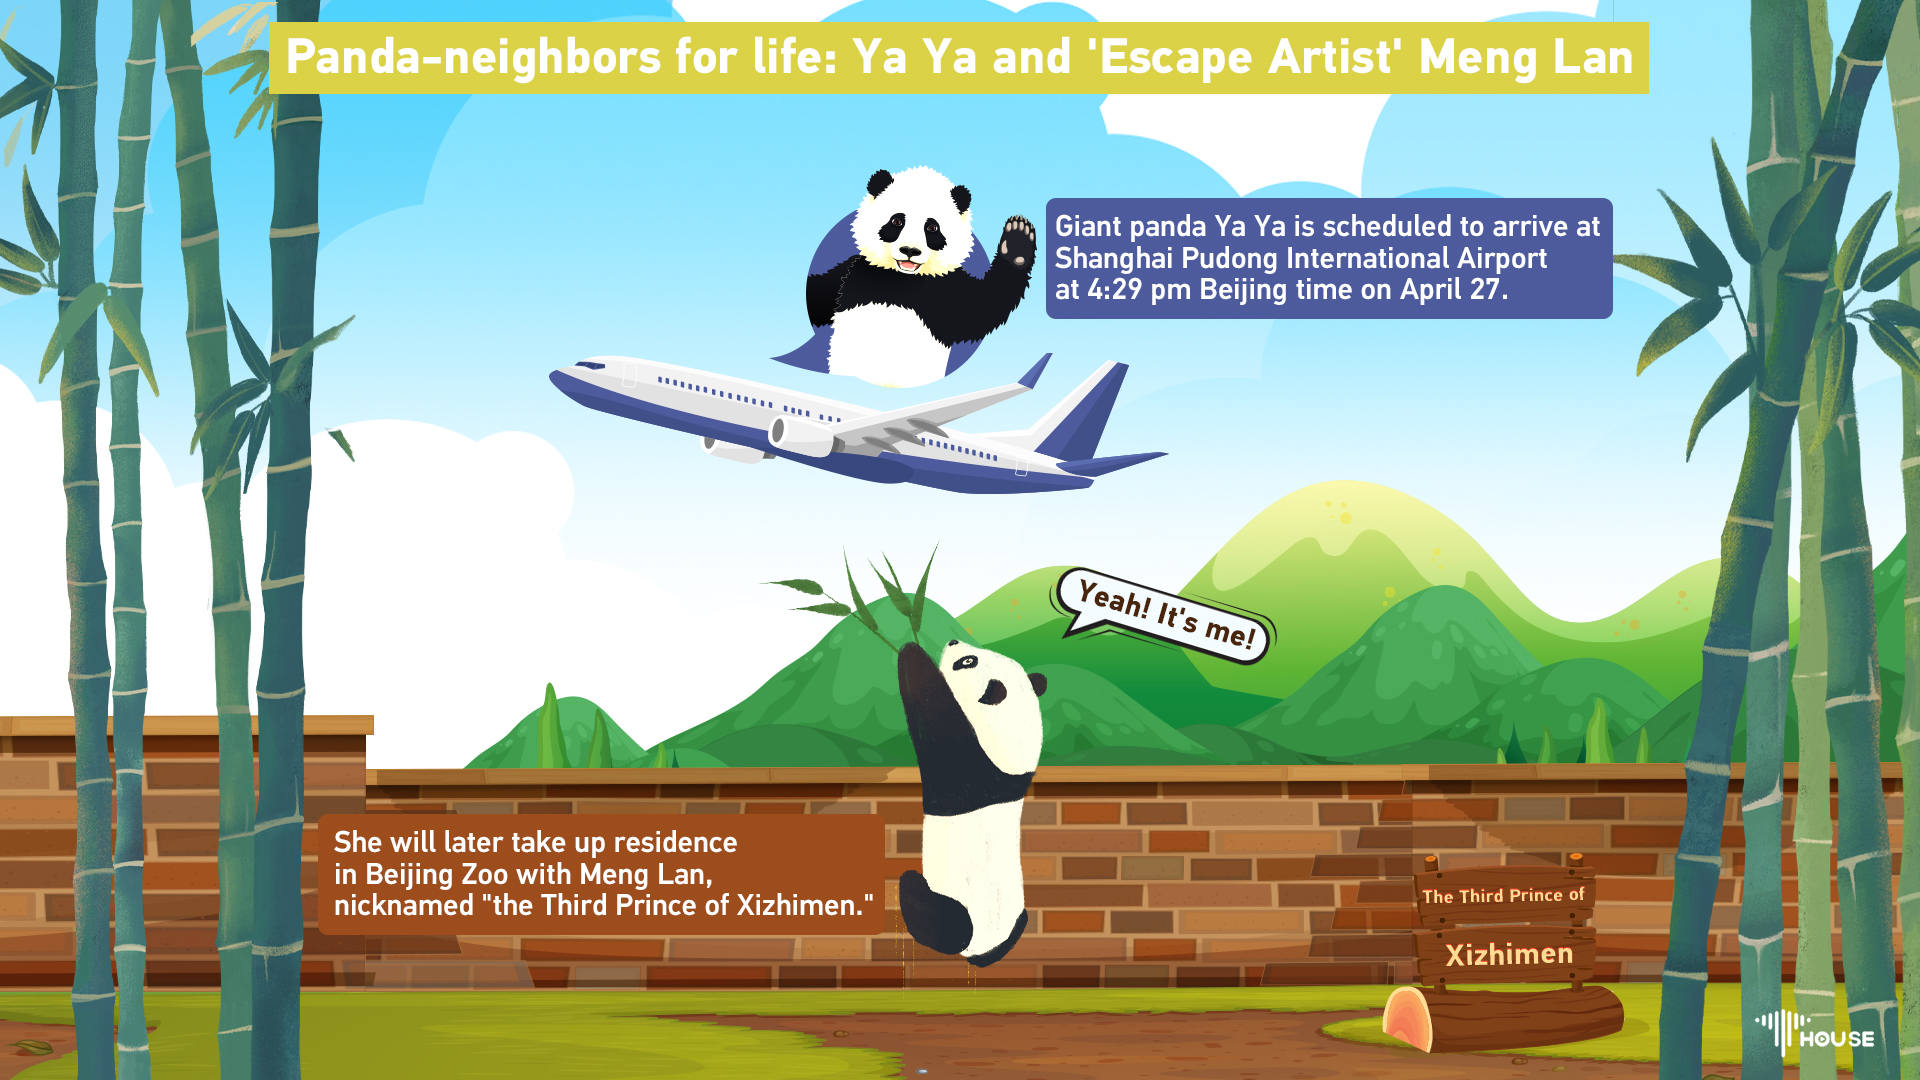 Panda-neighbors for life: Ya Ya and 'Escape Artist' Meng Lan